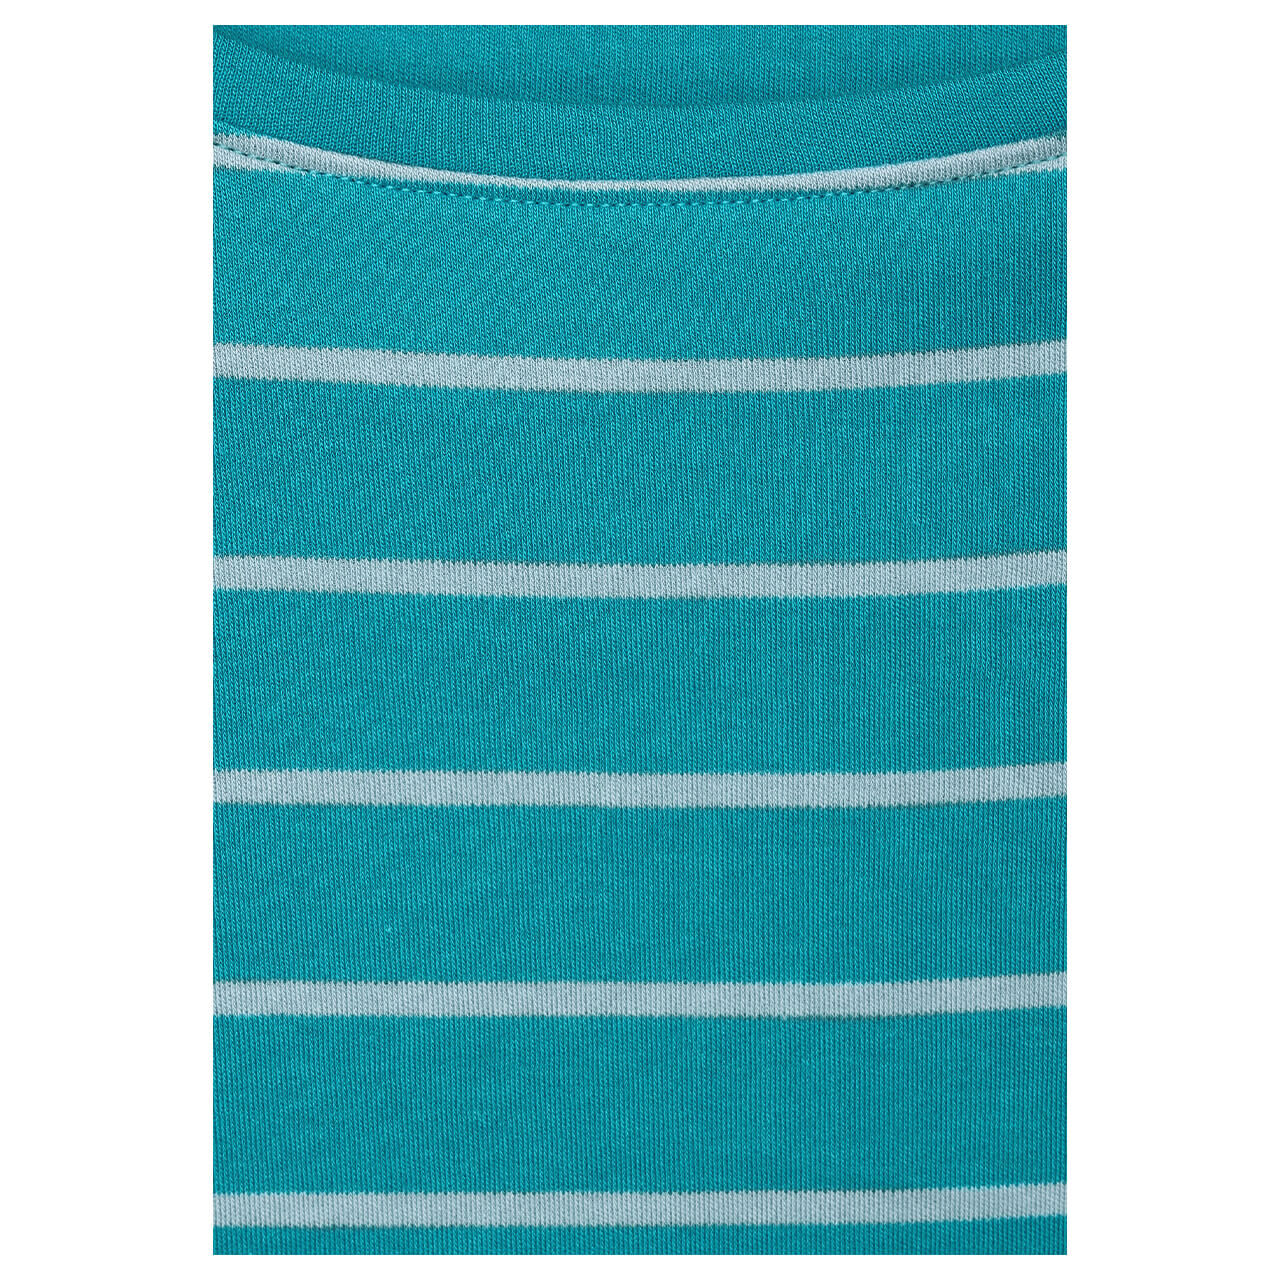 Cecil Damen 3/4 Arm Shirt Basic Boatneck frosted aqua blue stripes